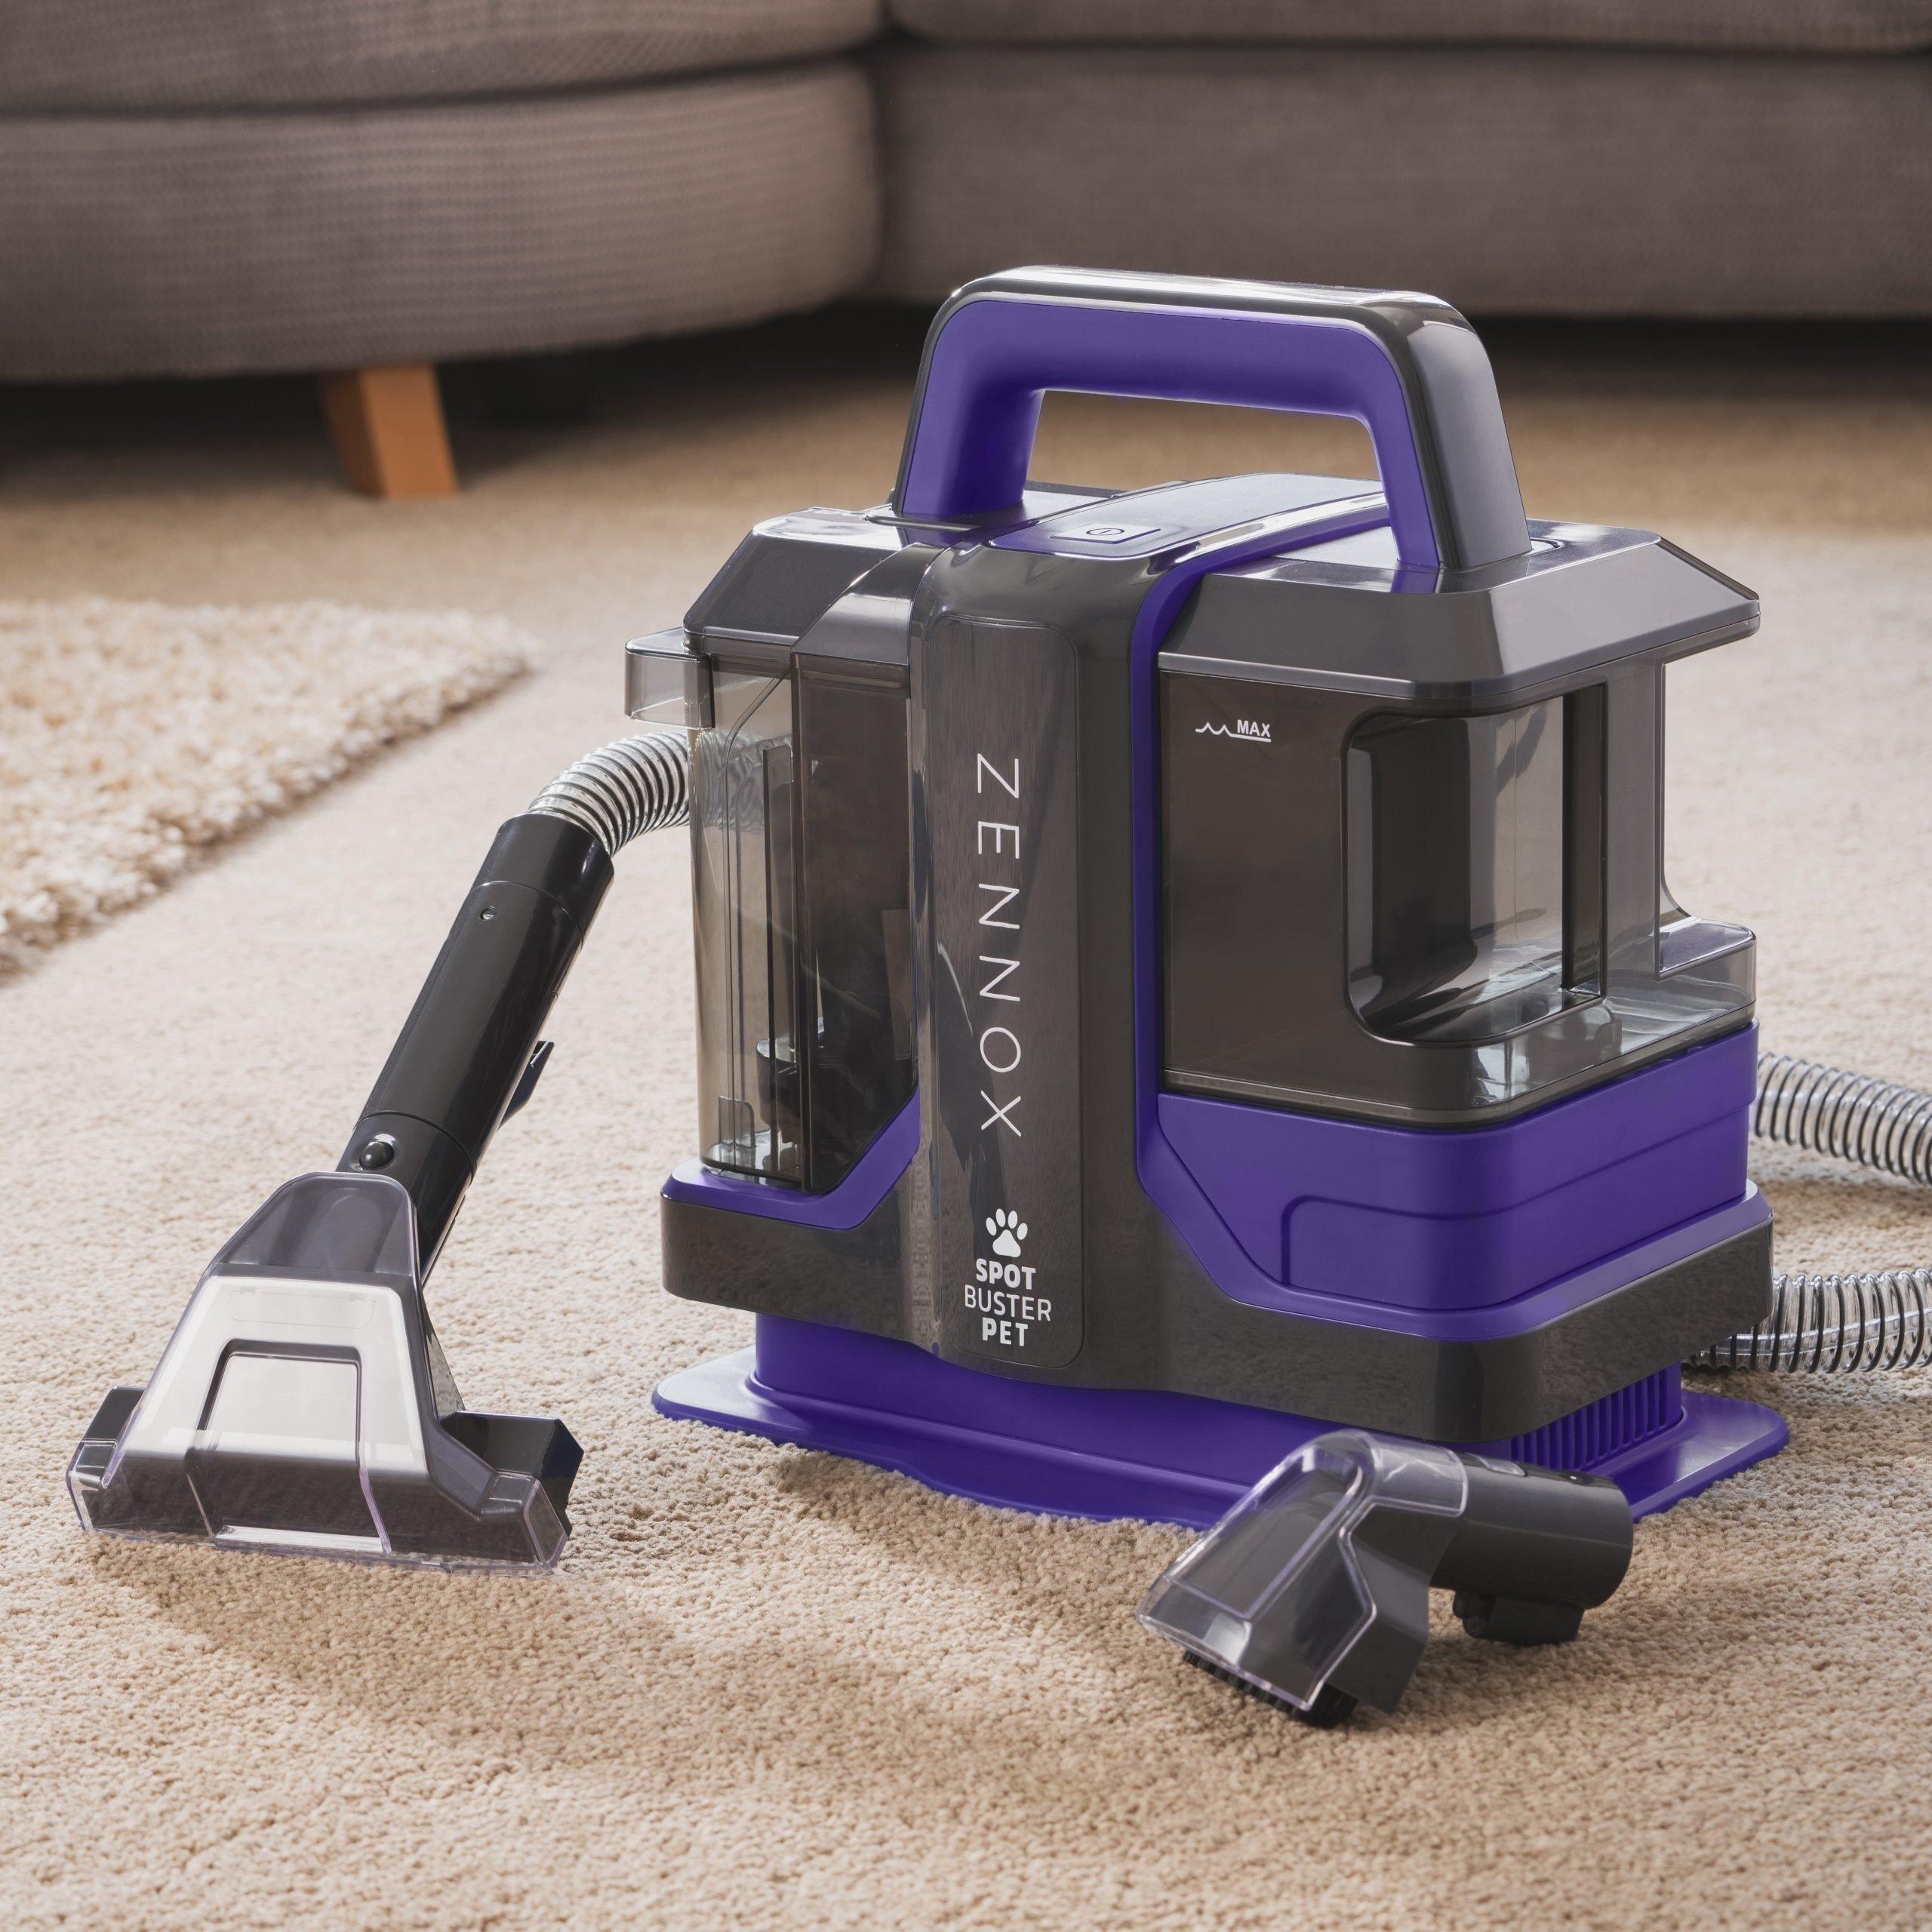 Zennox Spot Buster Pet Carpet & Upholstery Cleaner Handheld Portable Compact